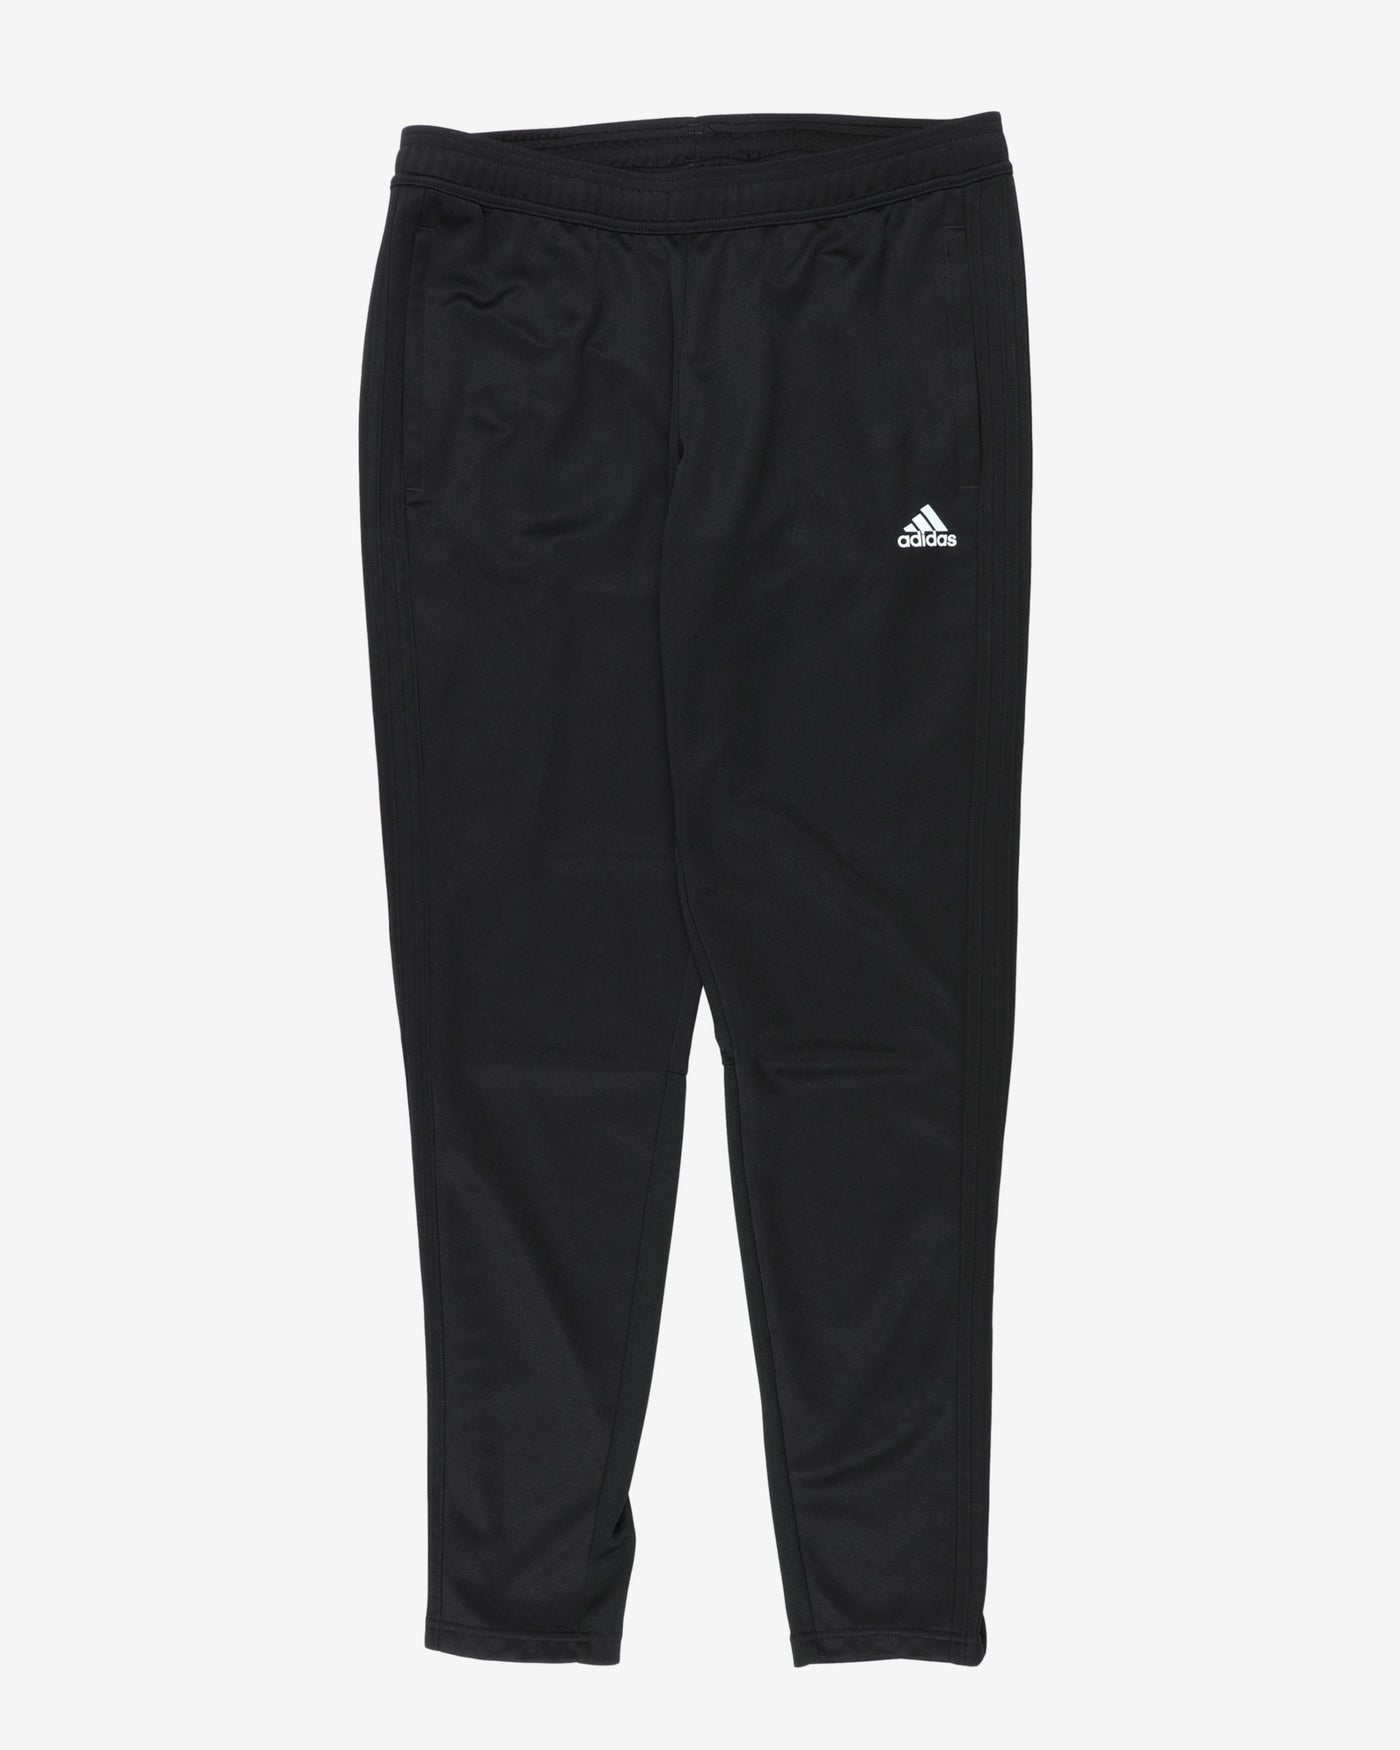 adidas black logo slim fit track pants - w32